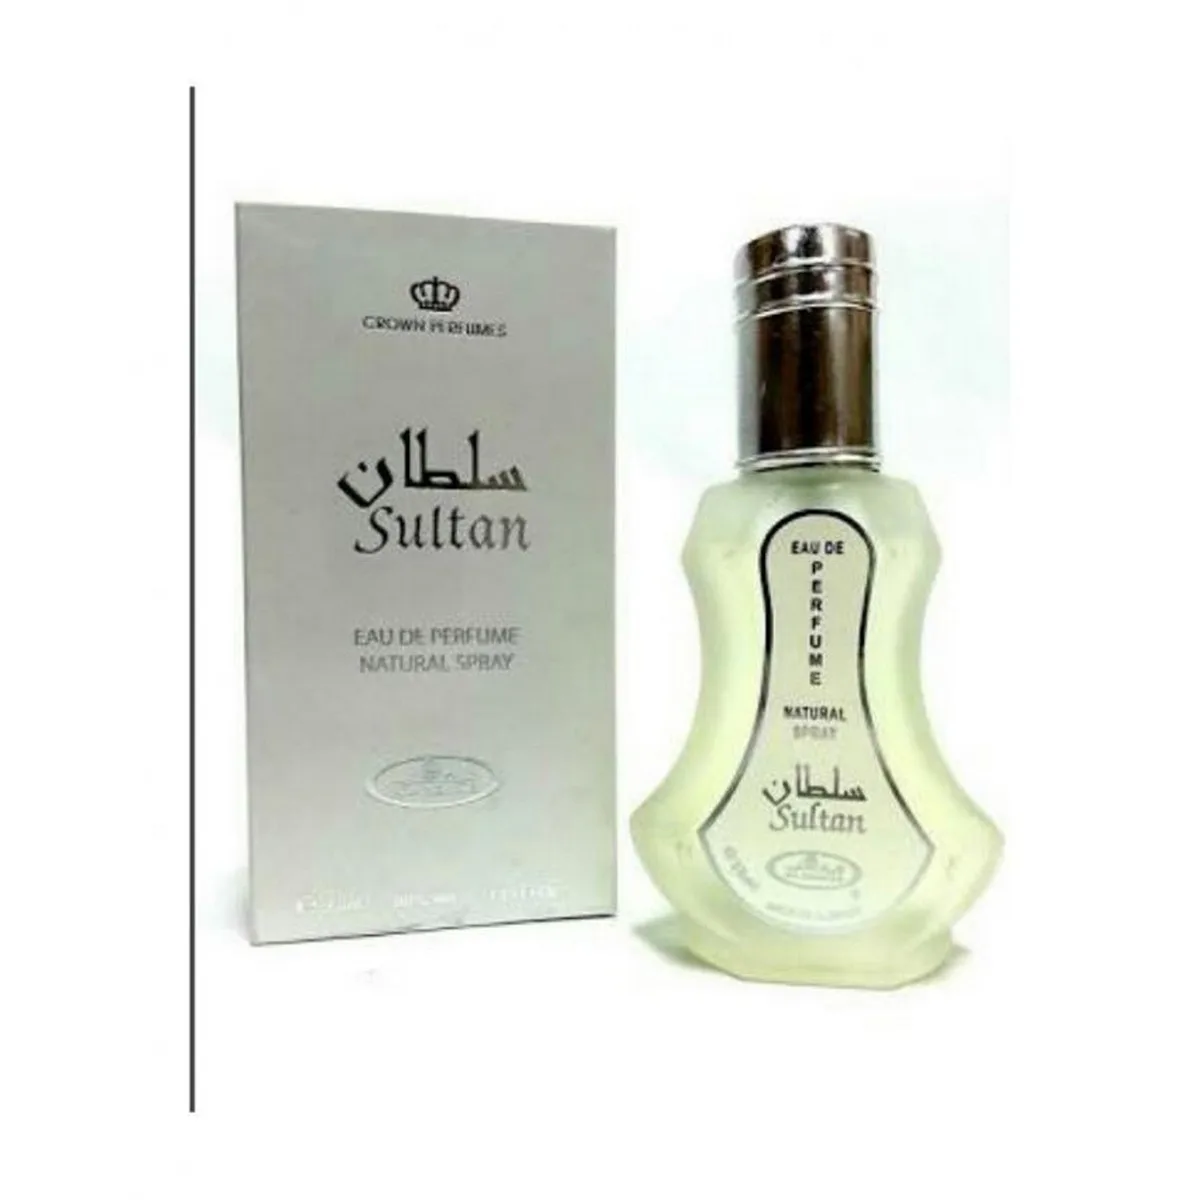 Sultan perfume price in Pakistan